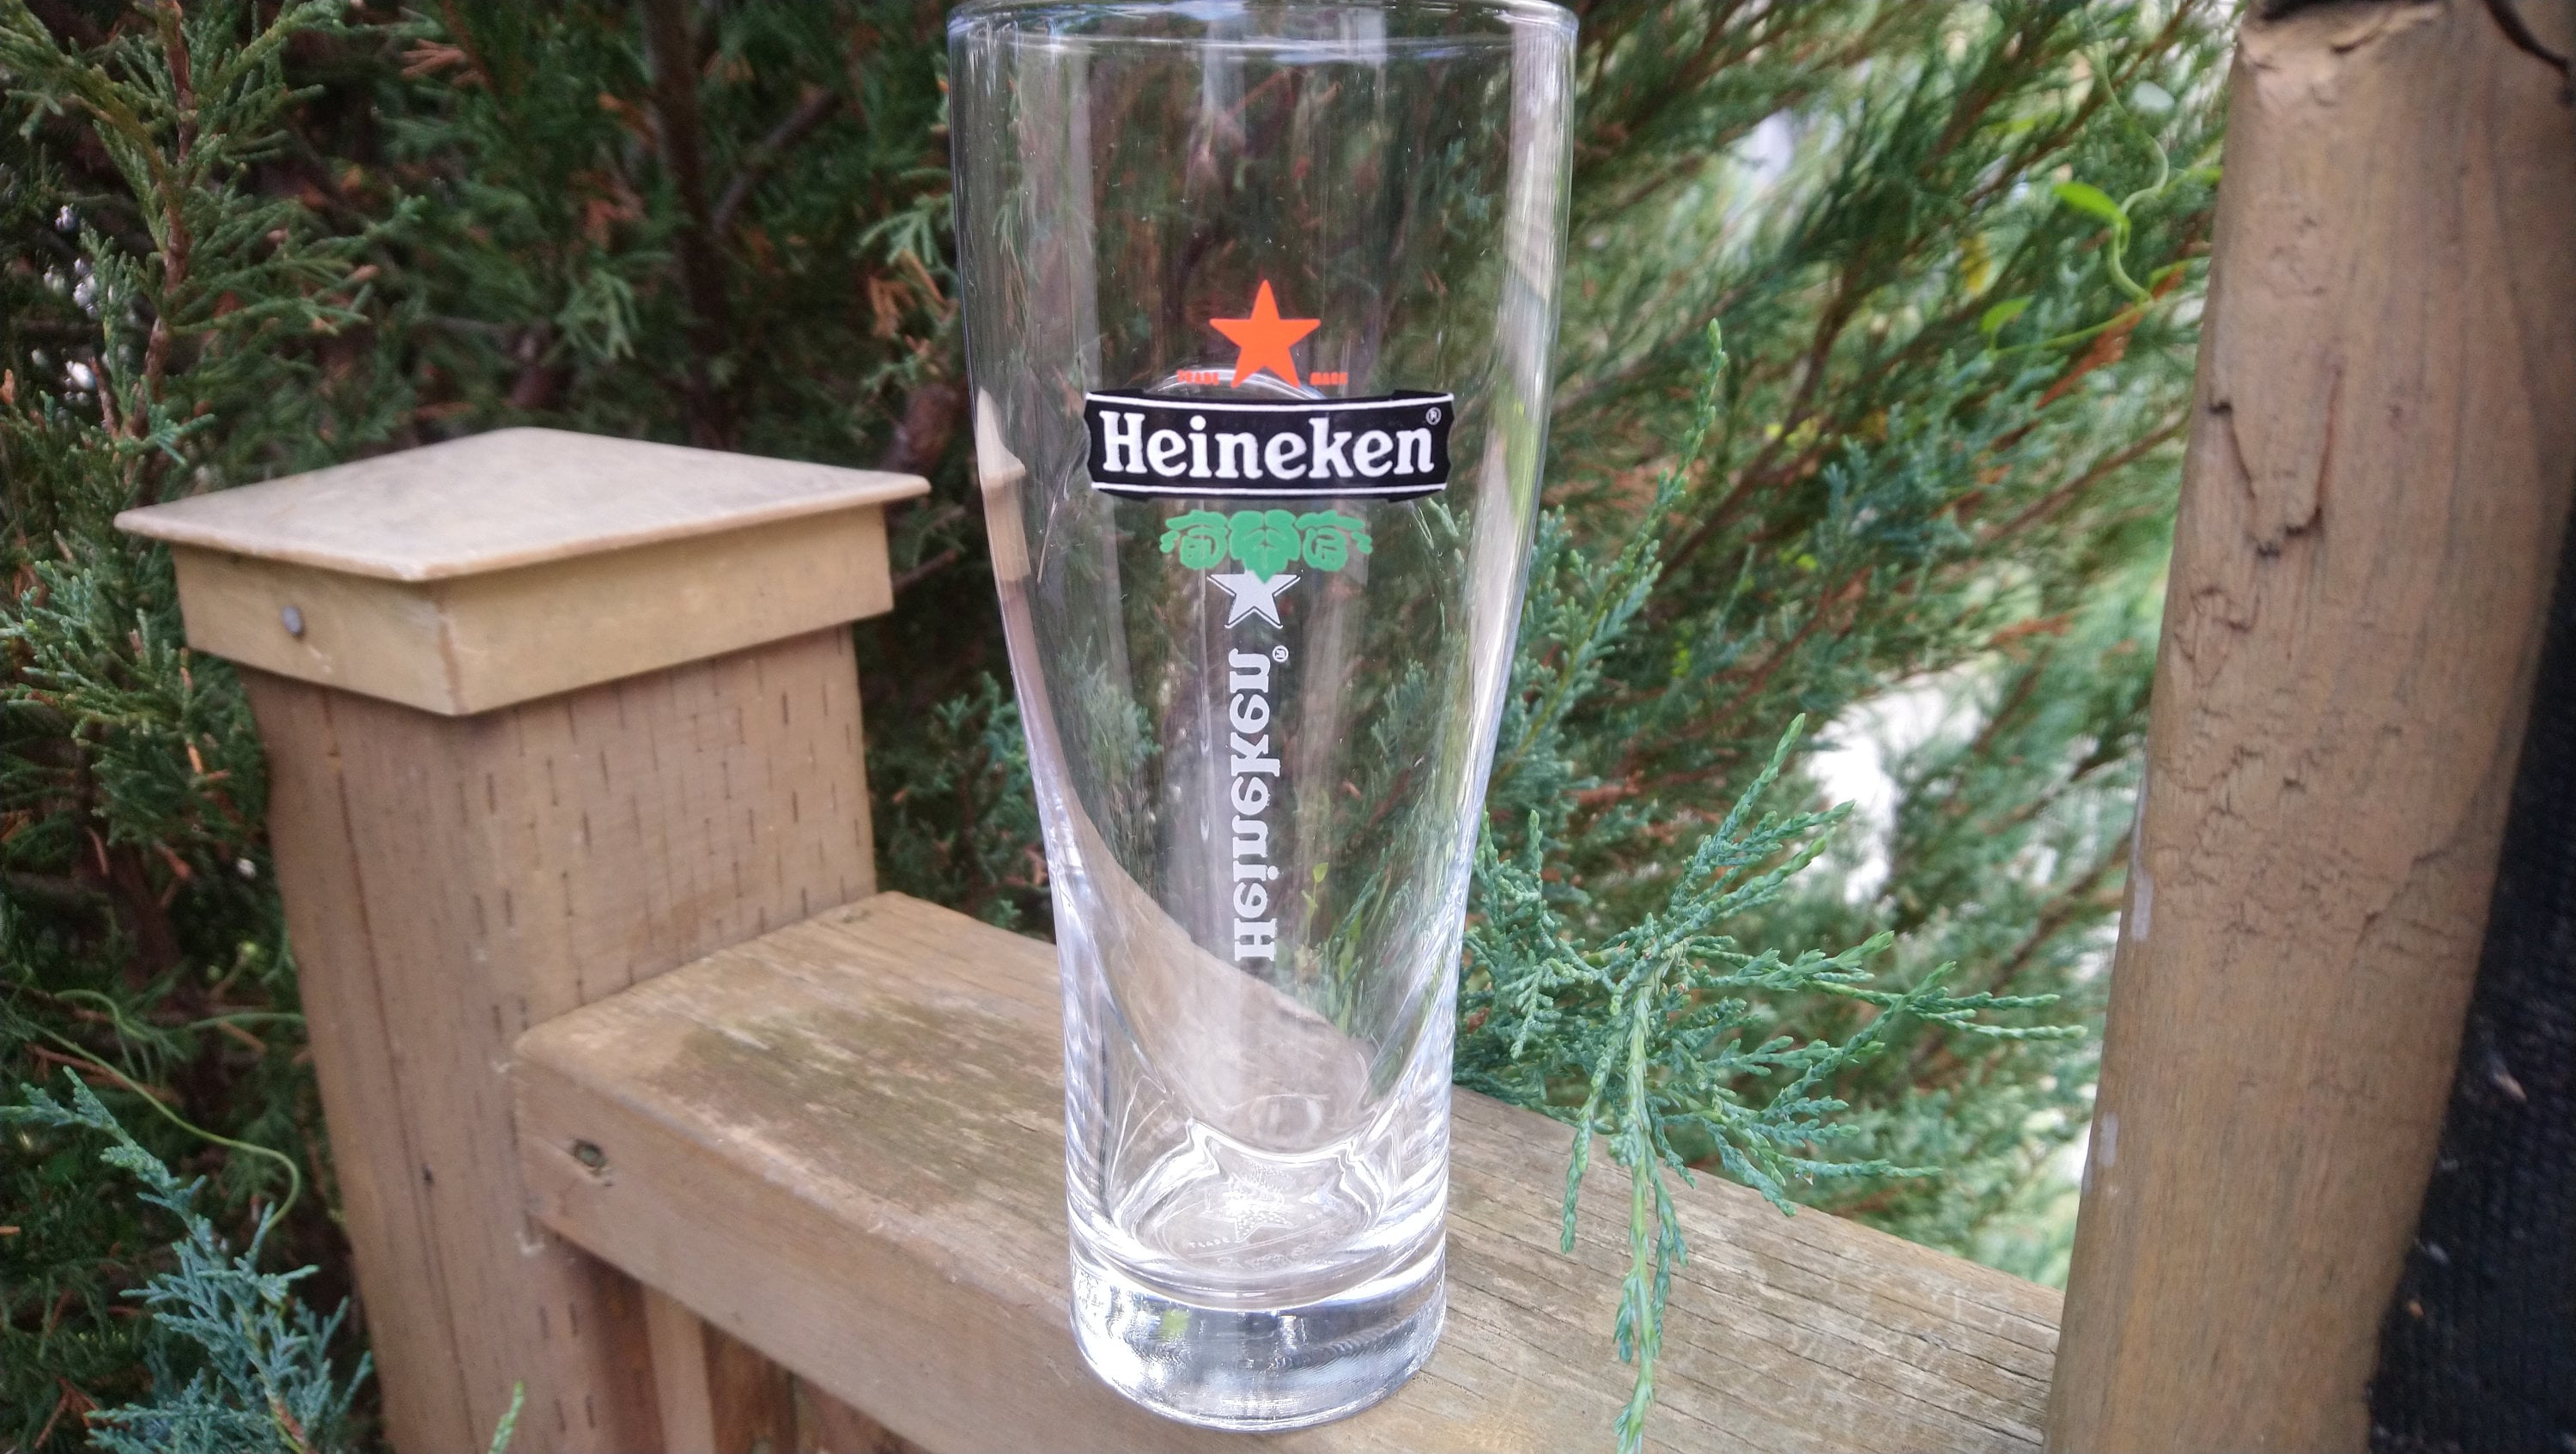 JOBLOT 48 X Heineken reusable plastic premier pint drinking glasses new 